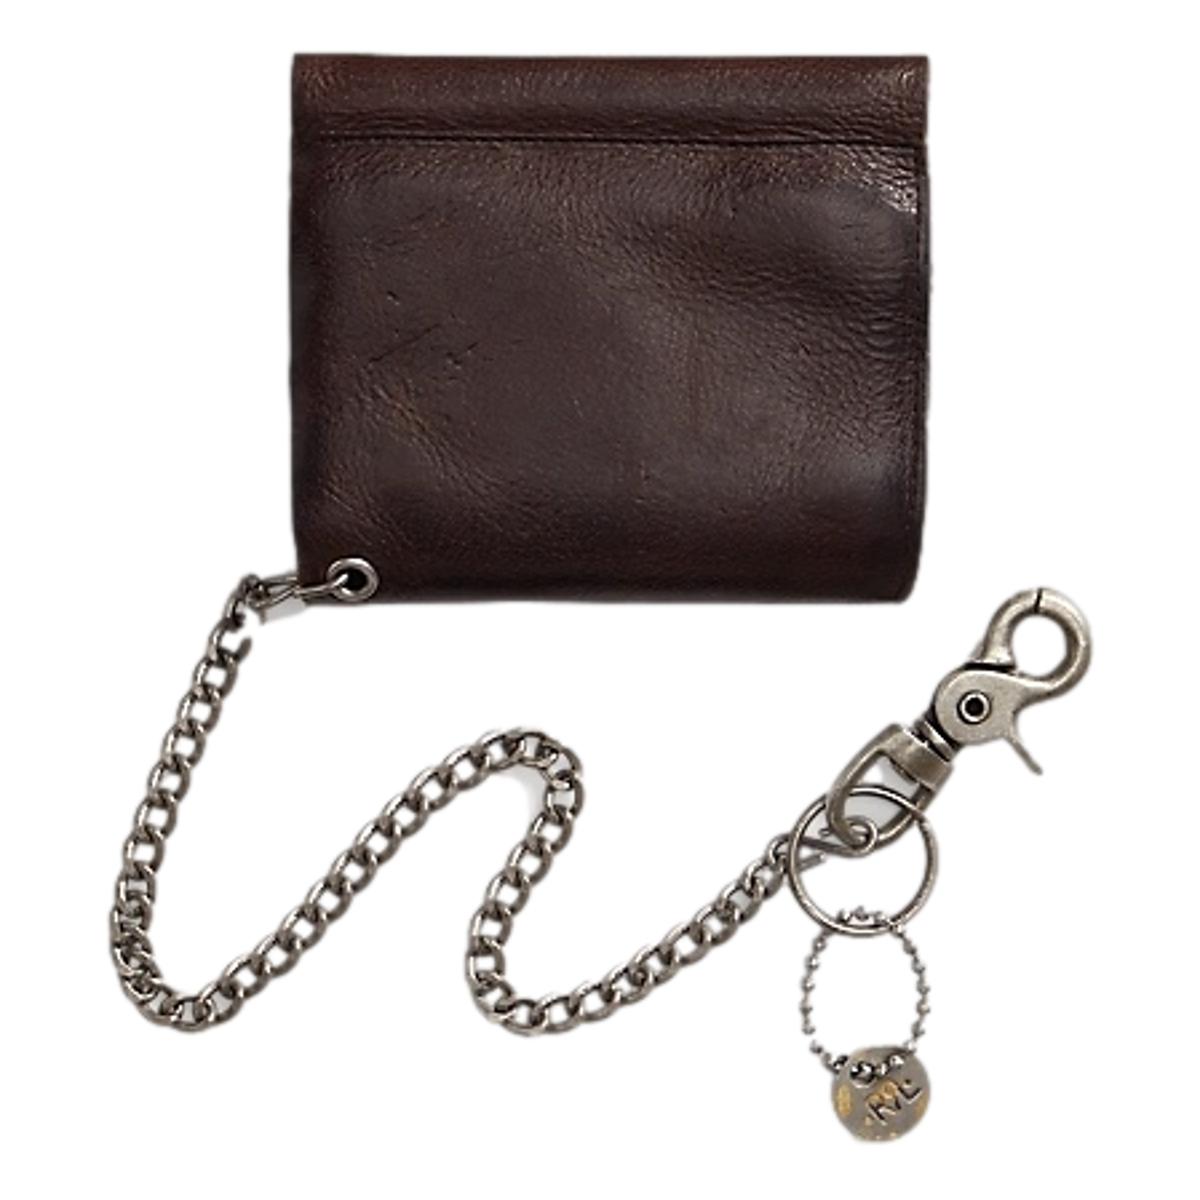 Leather Rider Wallet With Chain Dark Brown - Wallet